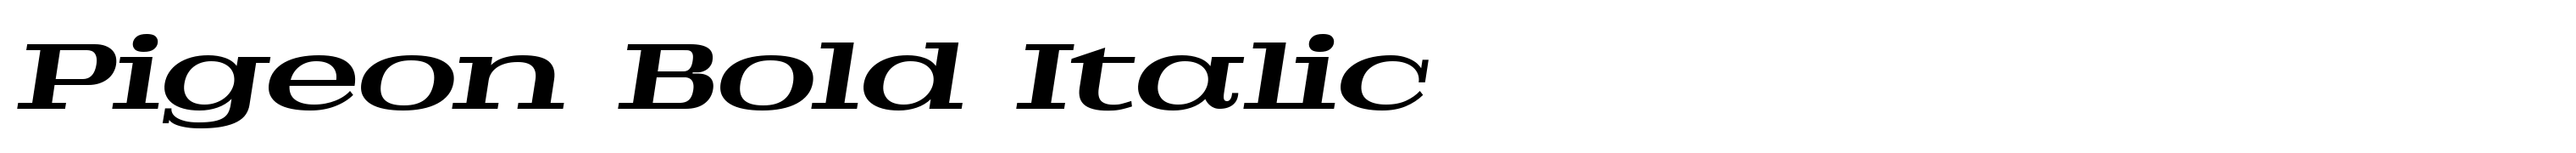 Pigeon Bold Italic